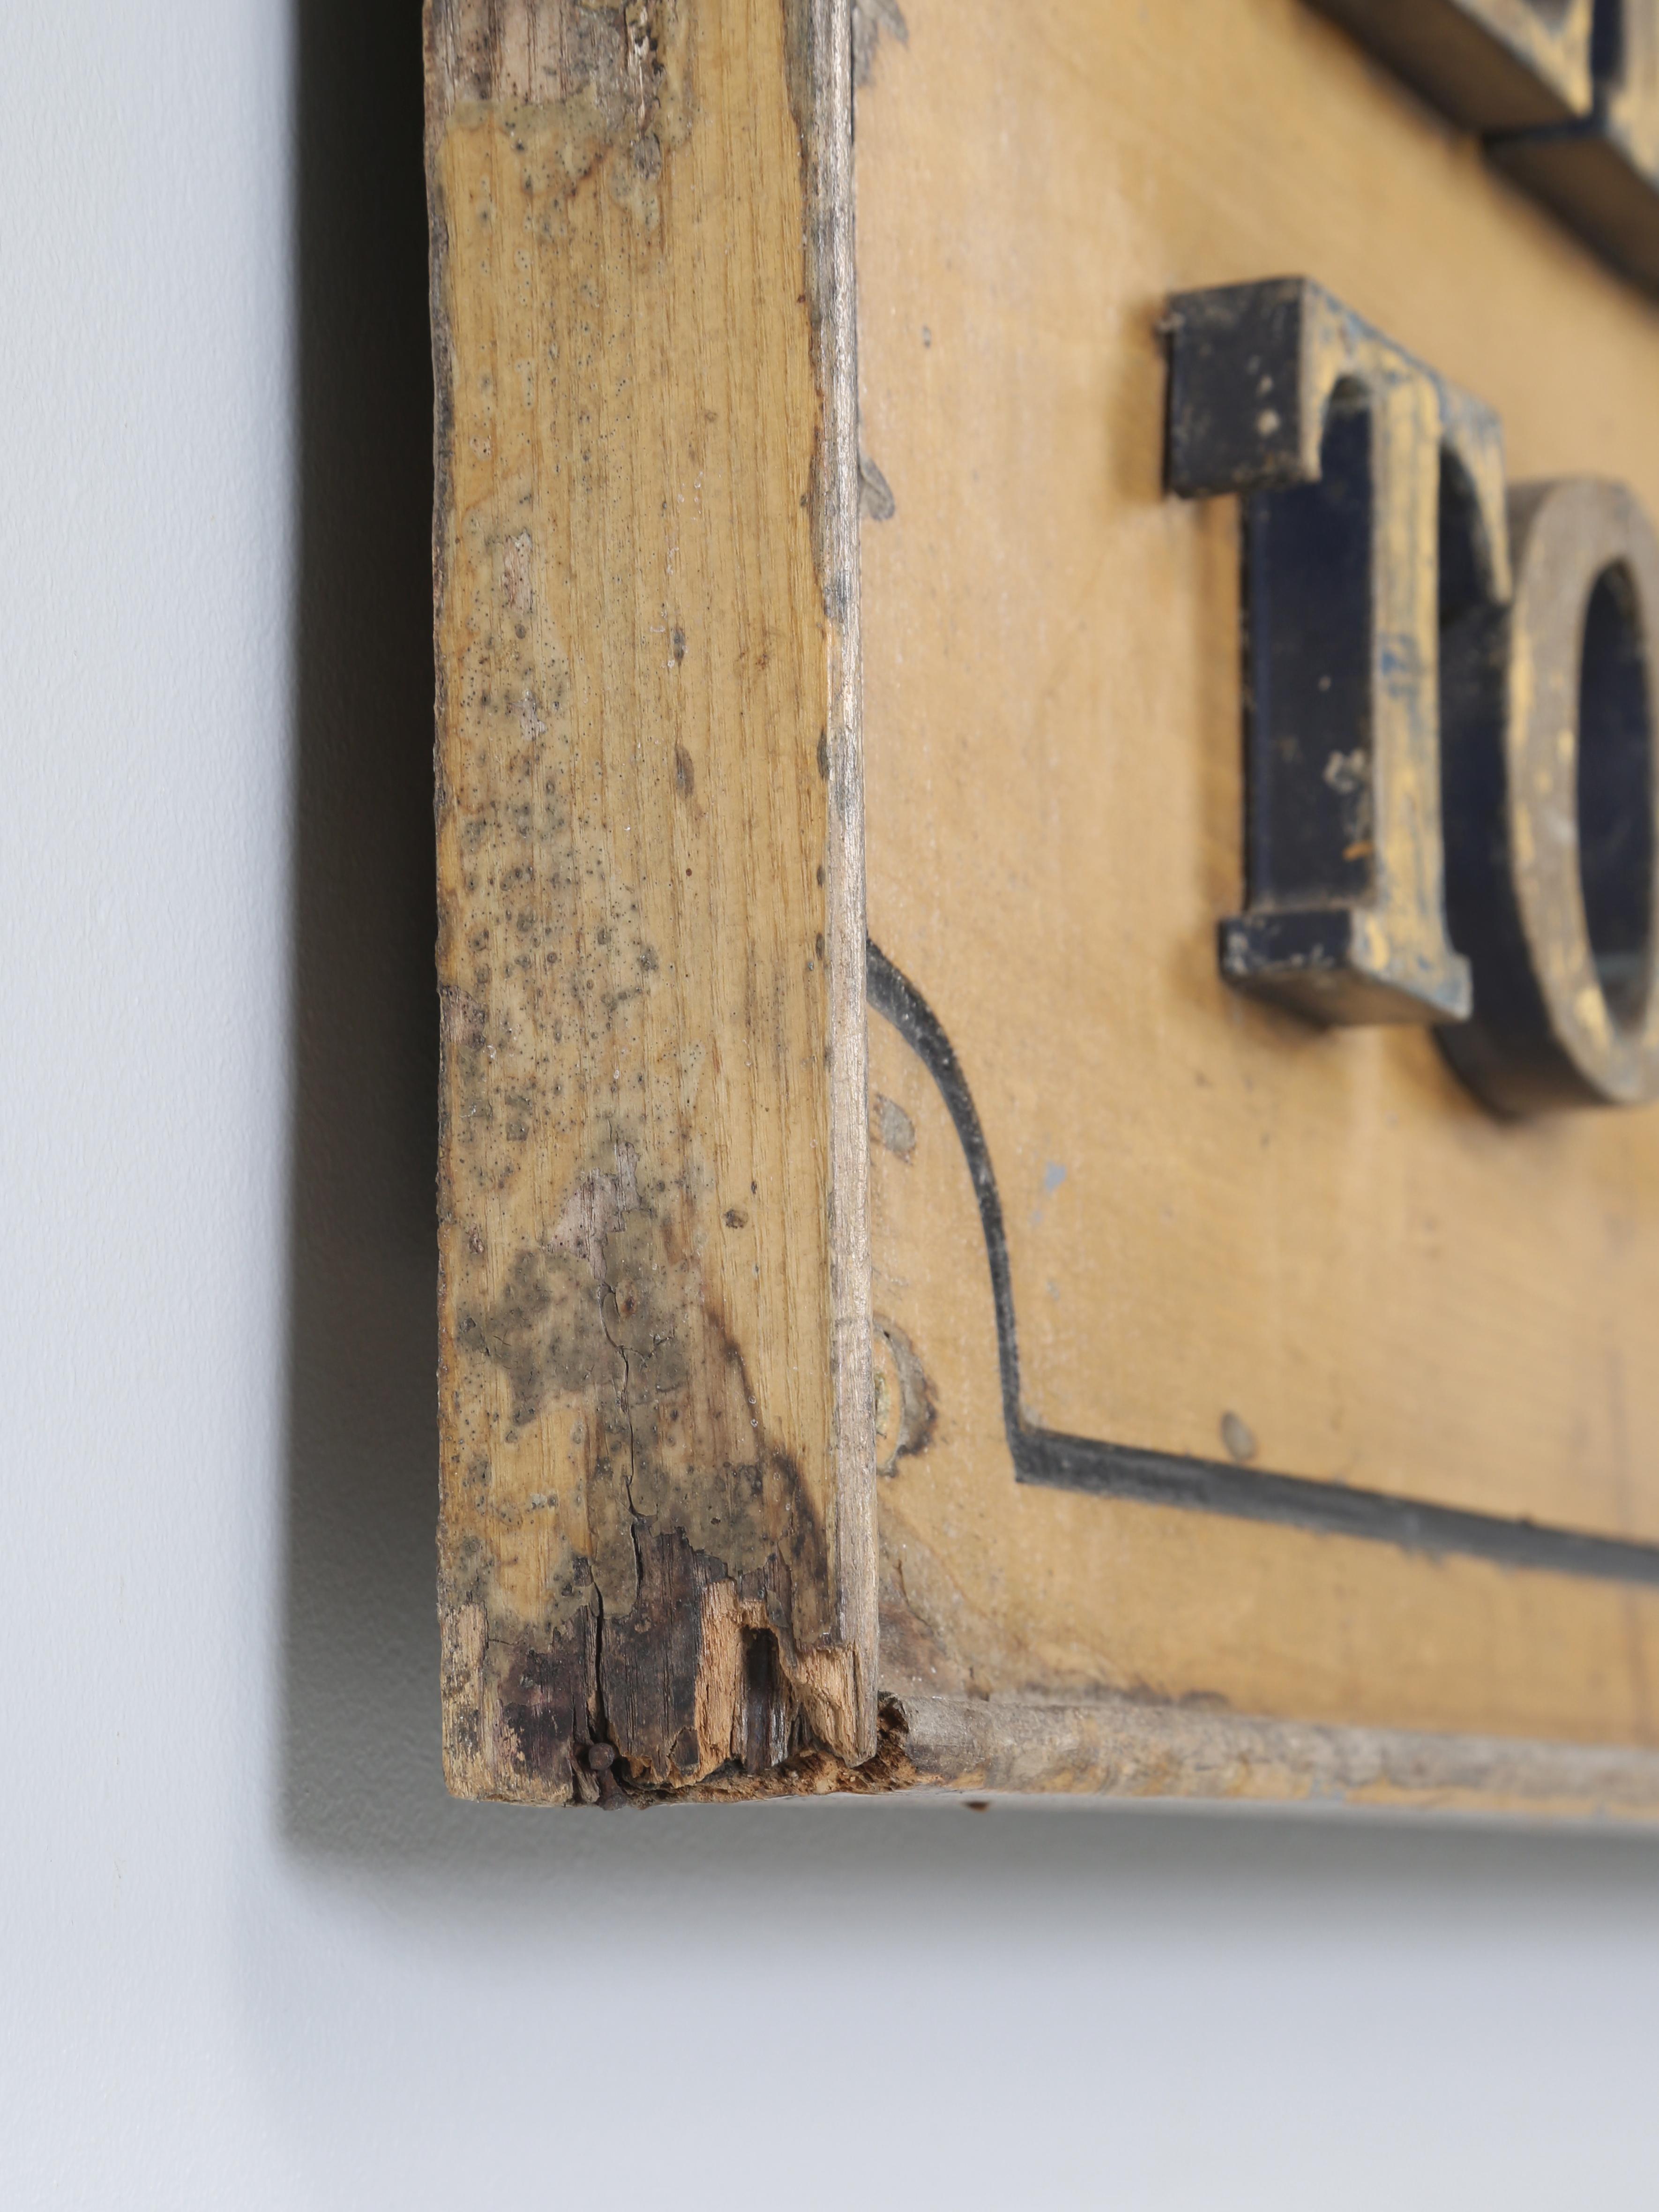 Wood Visitors Please Report To Reception, Antique Sign Original Unrestored Condition